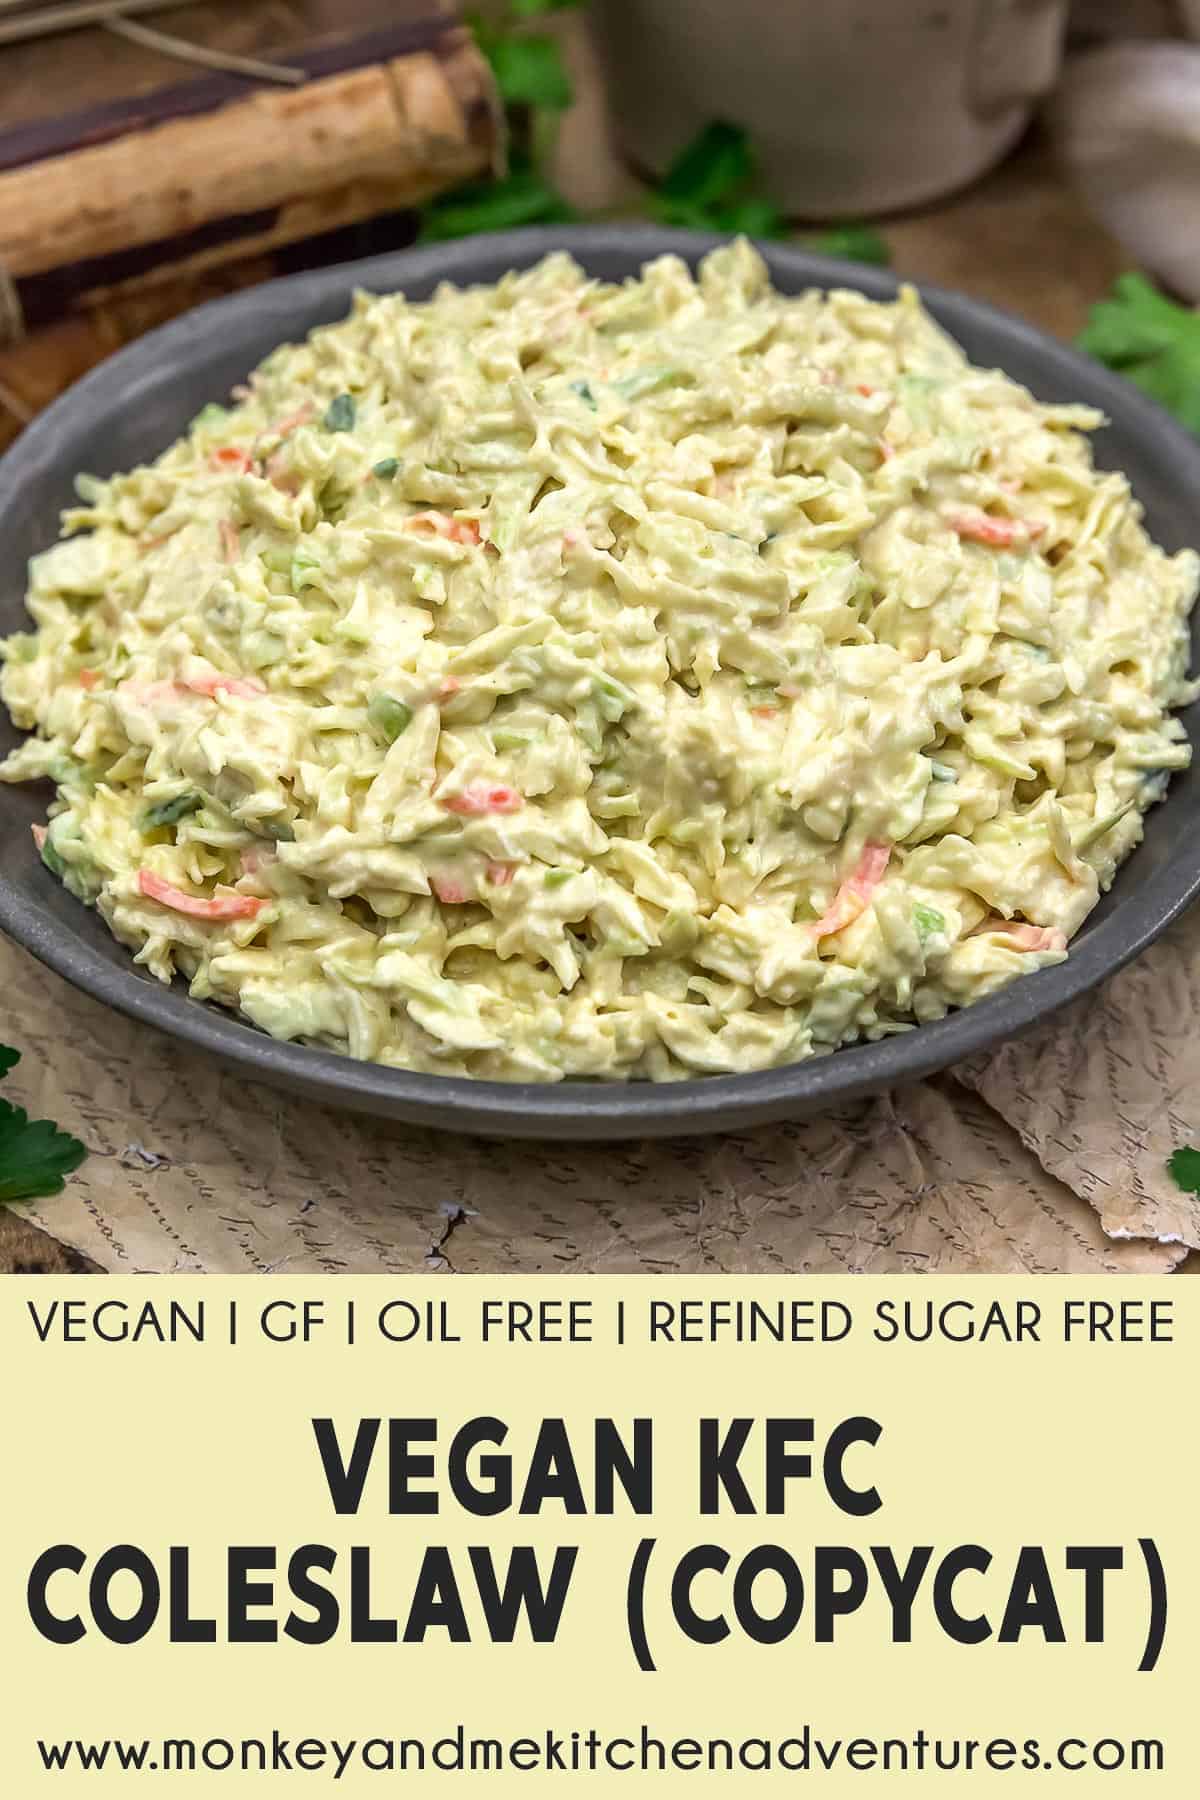 Vegan KFC Coleslaw (Copycat) with text description